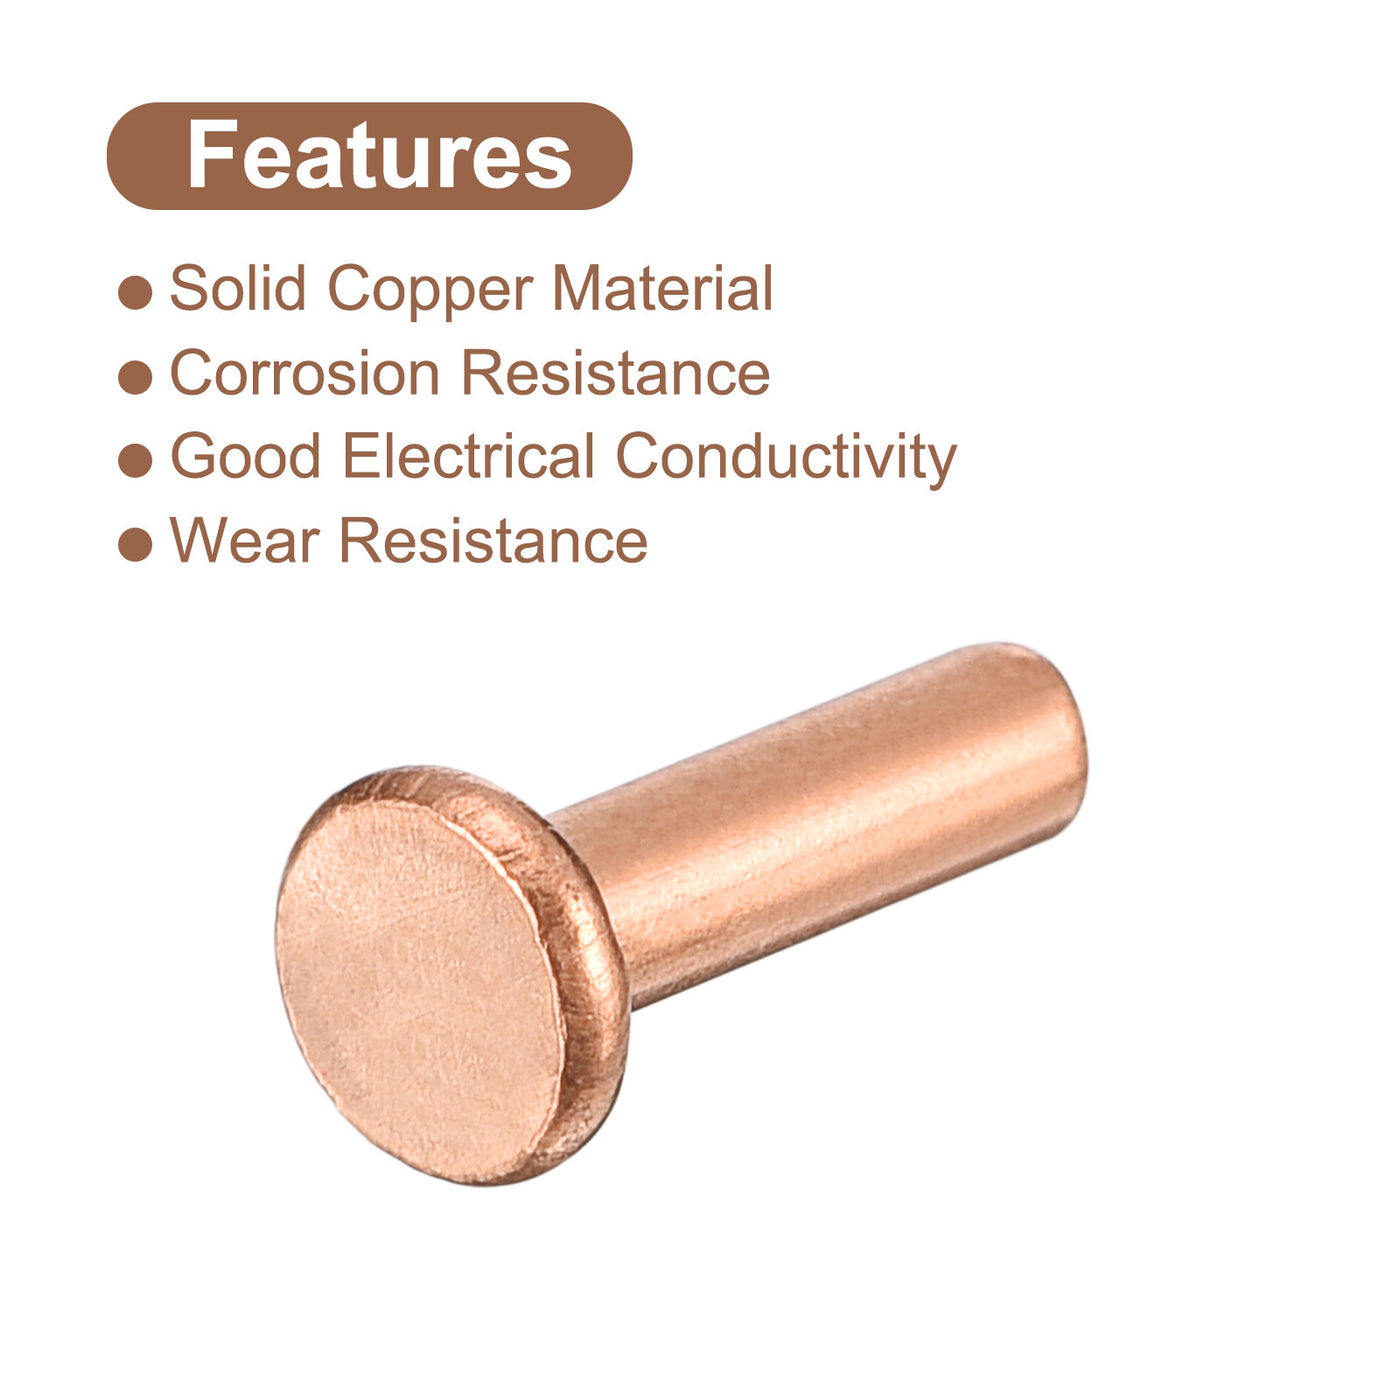 uxcell Uxcell 100Pcs 3mm Dia x 10mm L Shank Flat Head Copper Solid Rivets Fastener Copper Tone